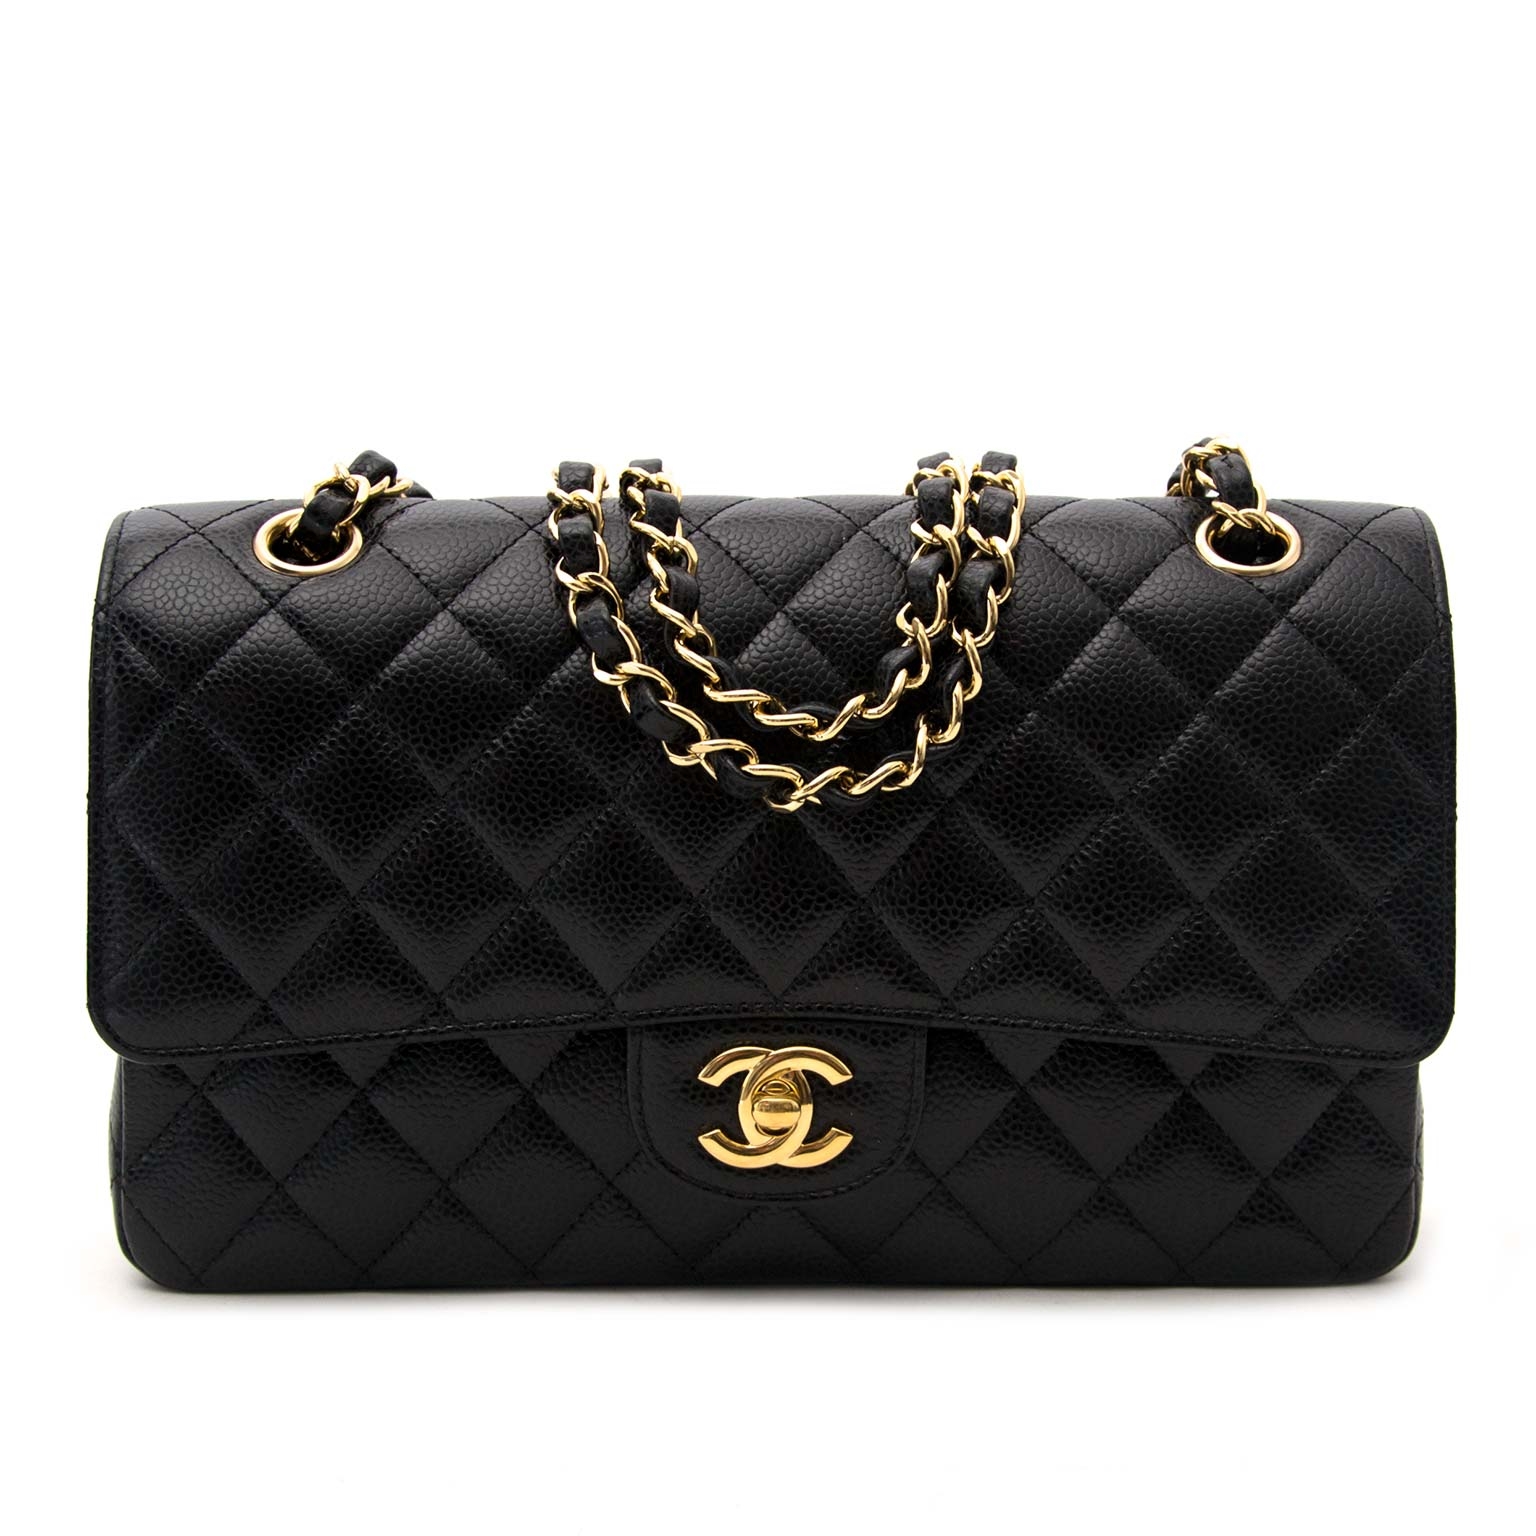 Chanel - Classic Flap Bag - Medium